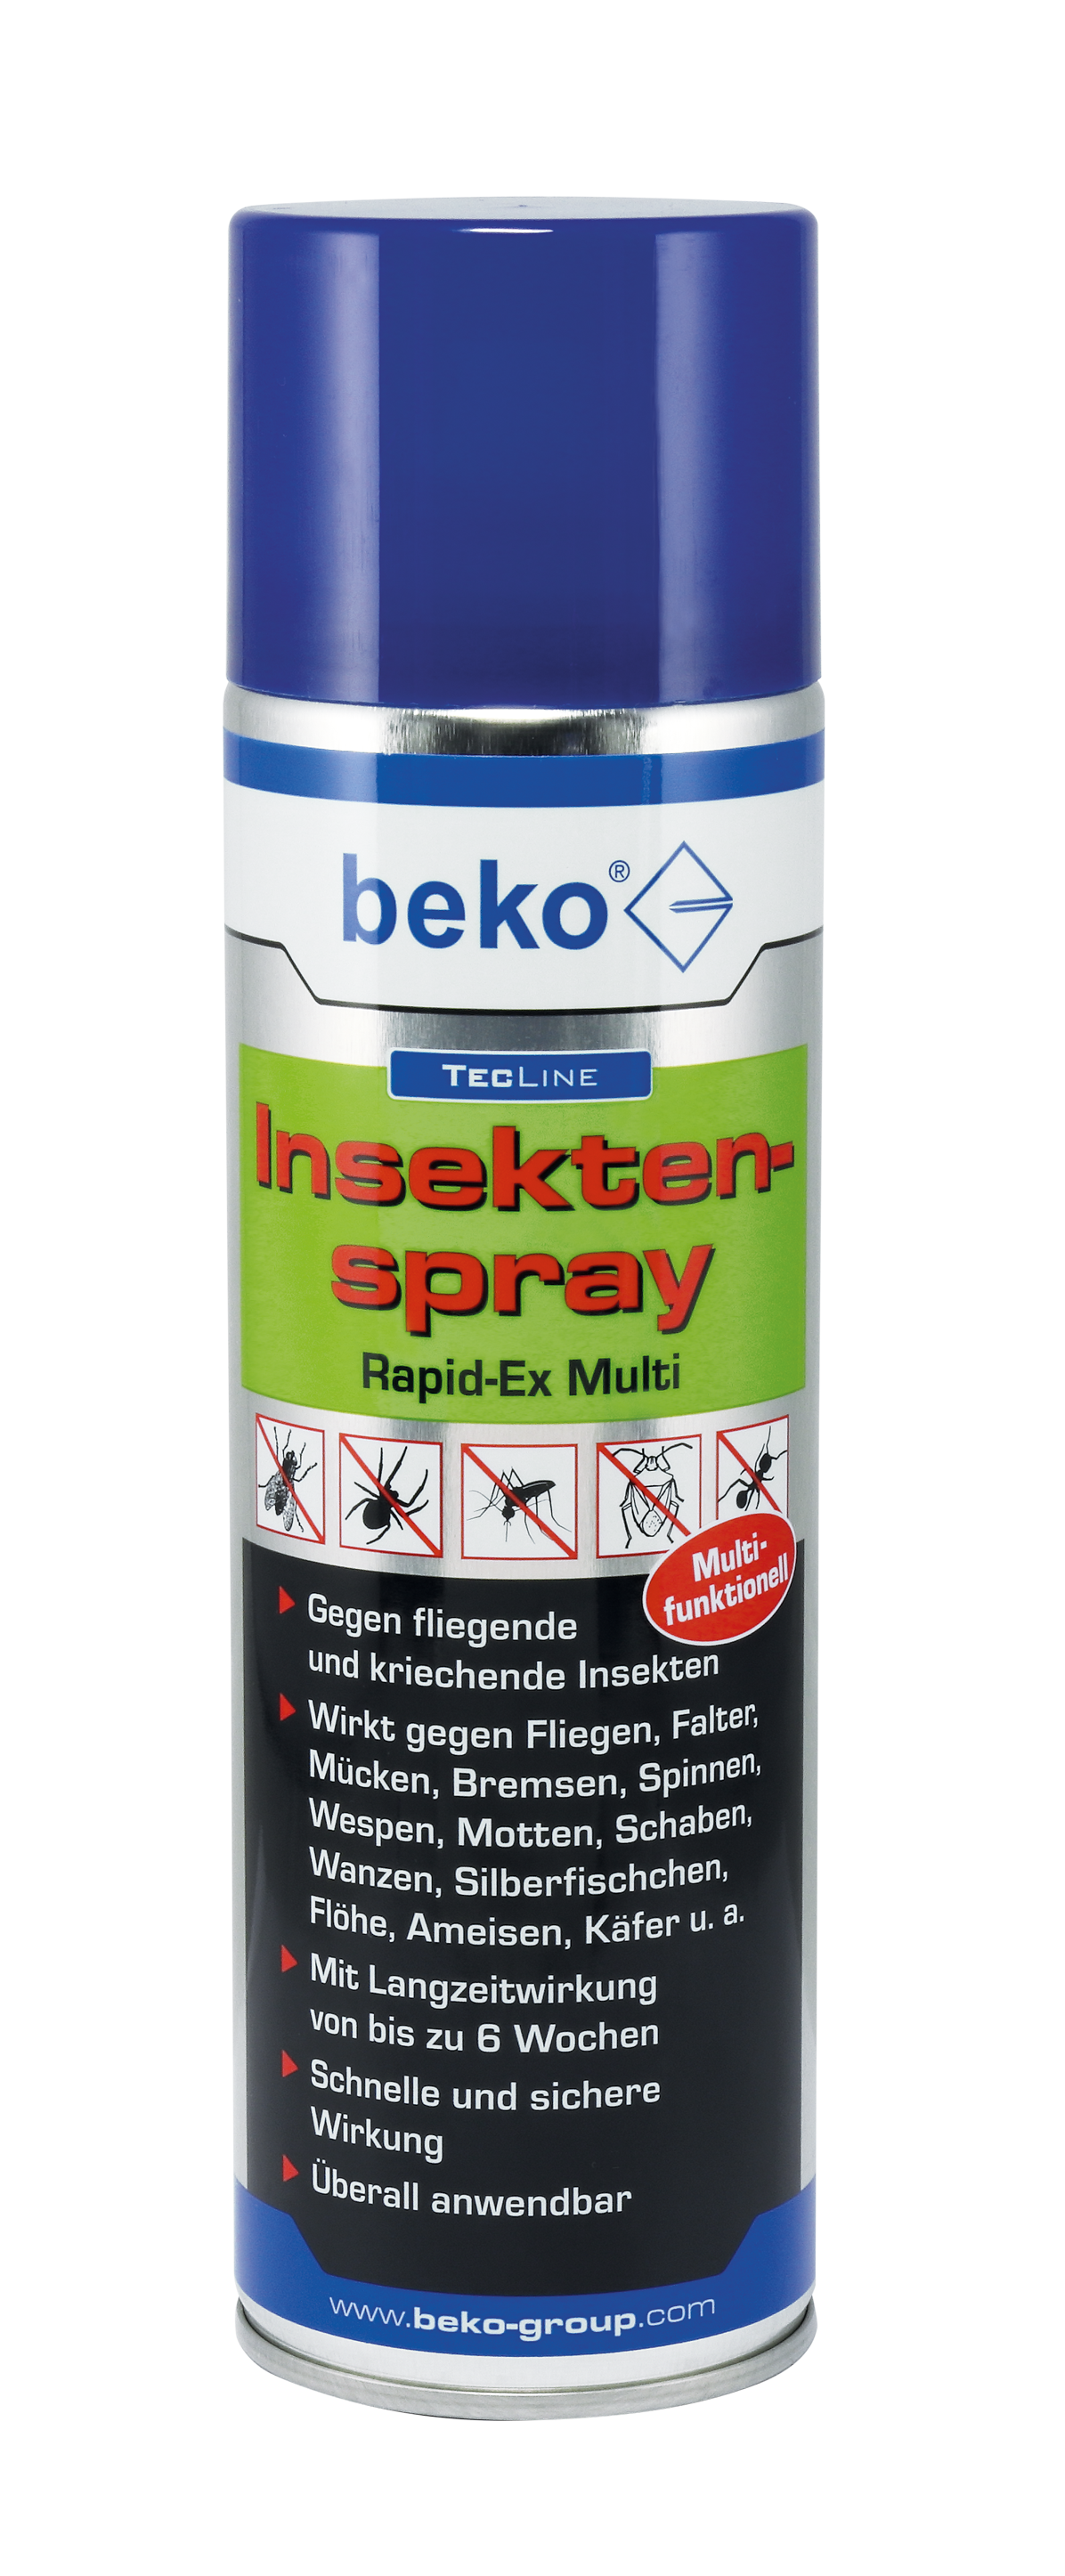 beko® TecLine Insektenspray, Rapid-Ex Multi, 500 ml